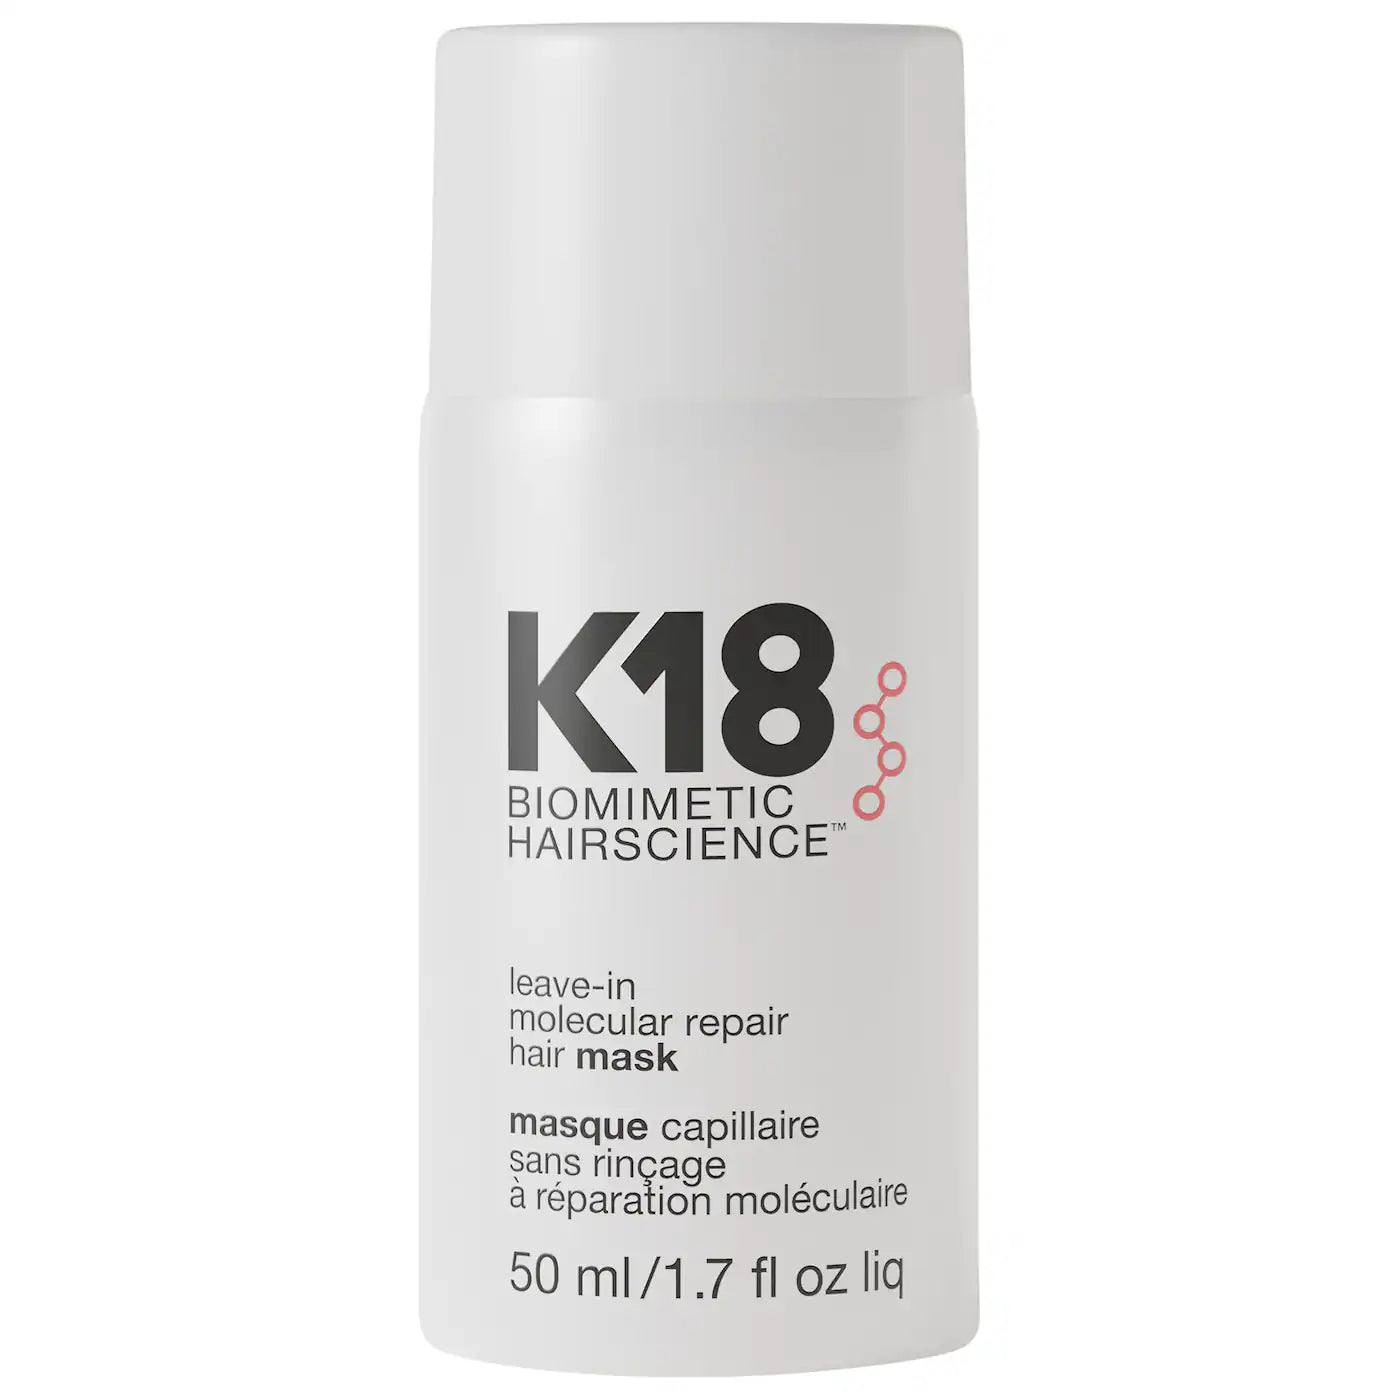 Masca K 18 - Full-Size Leave-in Molecular Repair Hair Mask